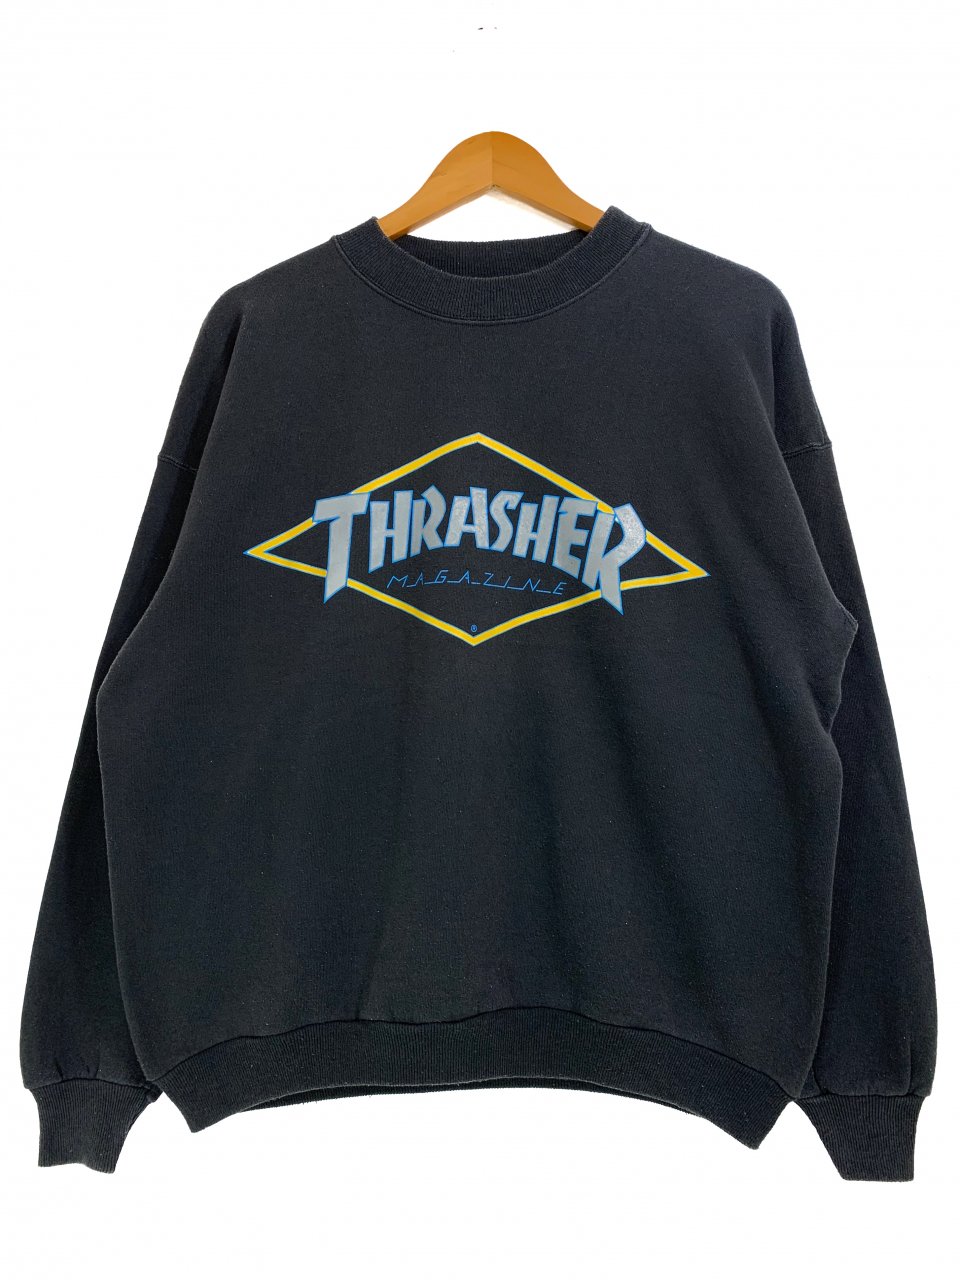 USA製 90s THRASHER Diamond Logo Sweatshirt 黒 L スラッシャー